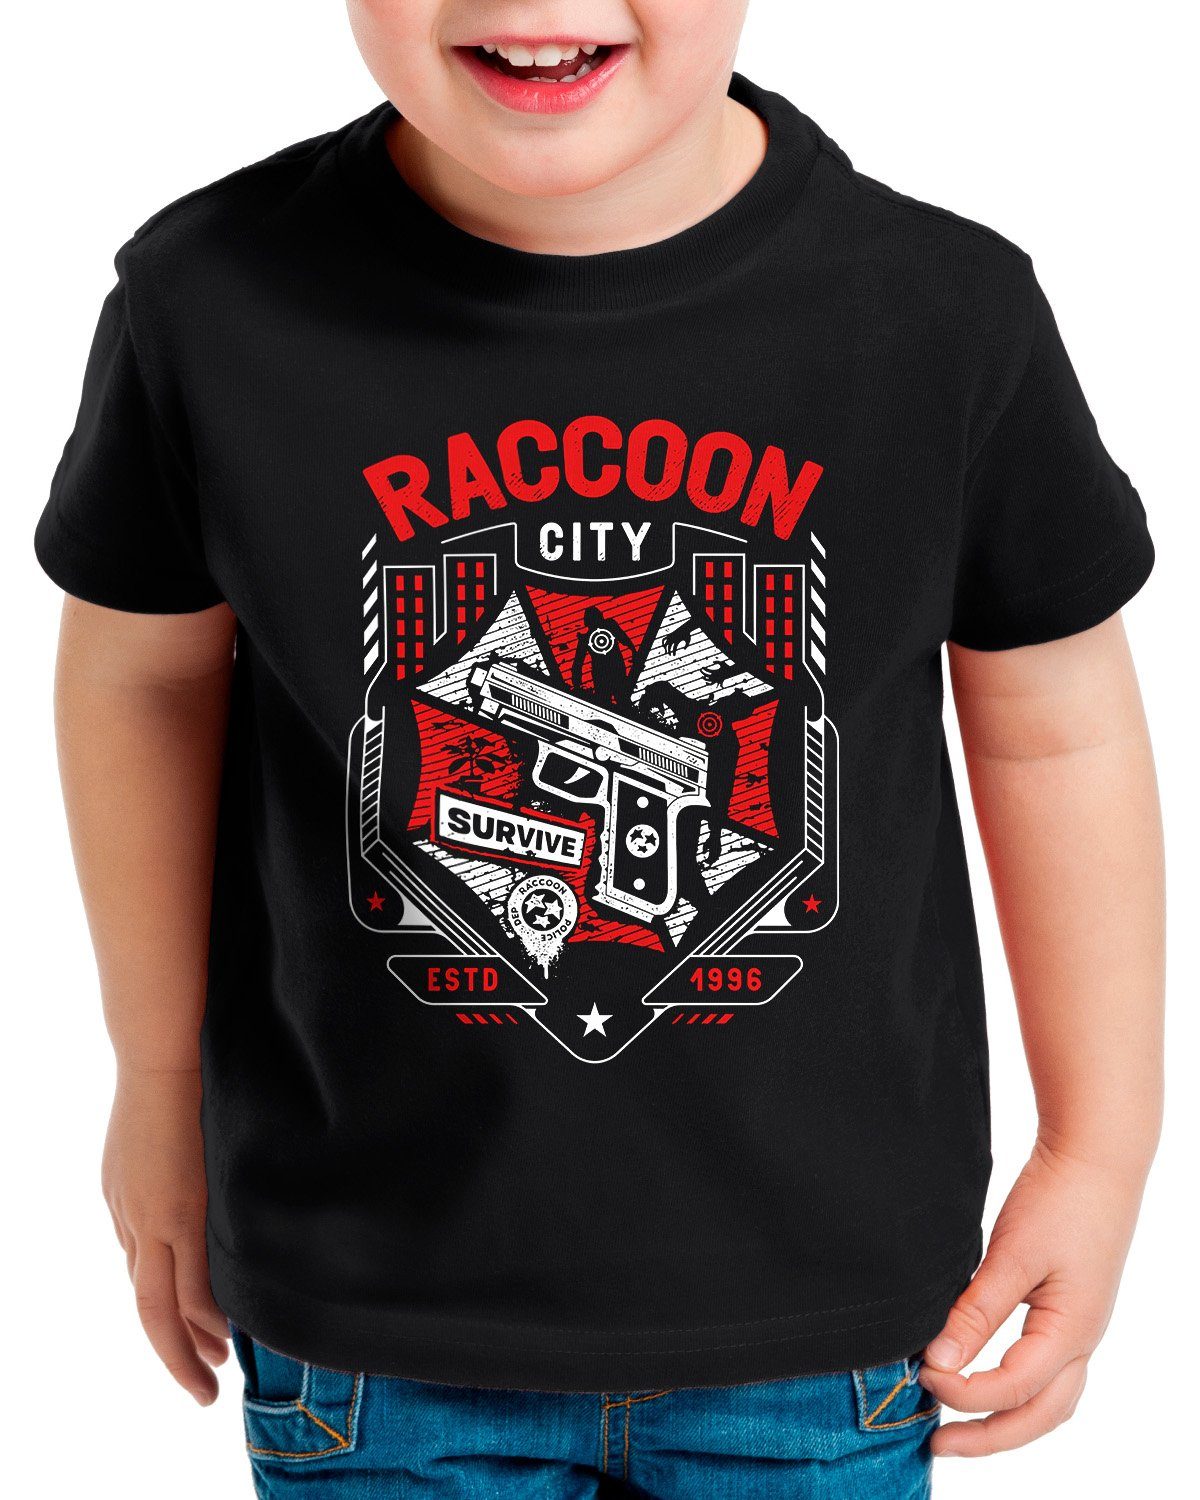 style3 Print-Shirt City evil T-Shirt virus Kinder resident Raccoon corp zombie umbrella